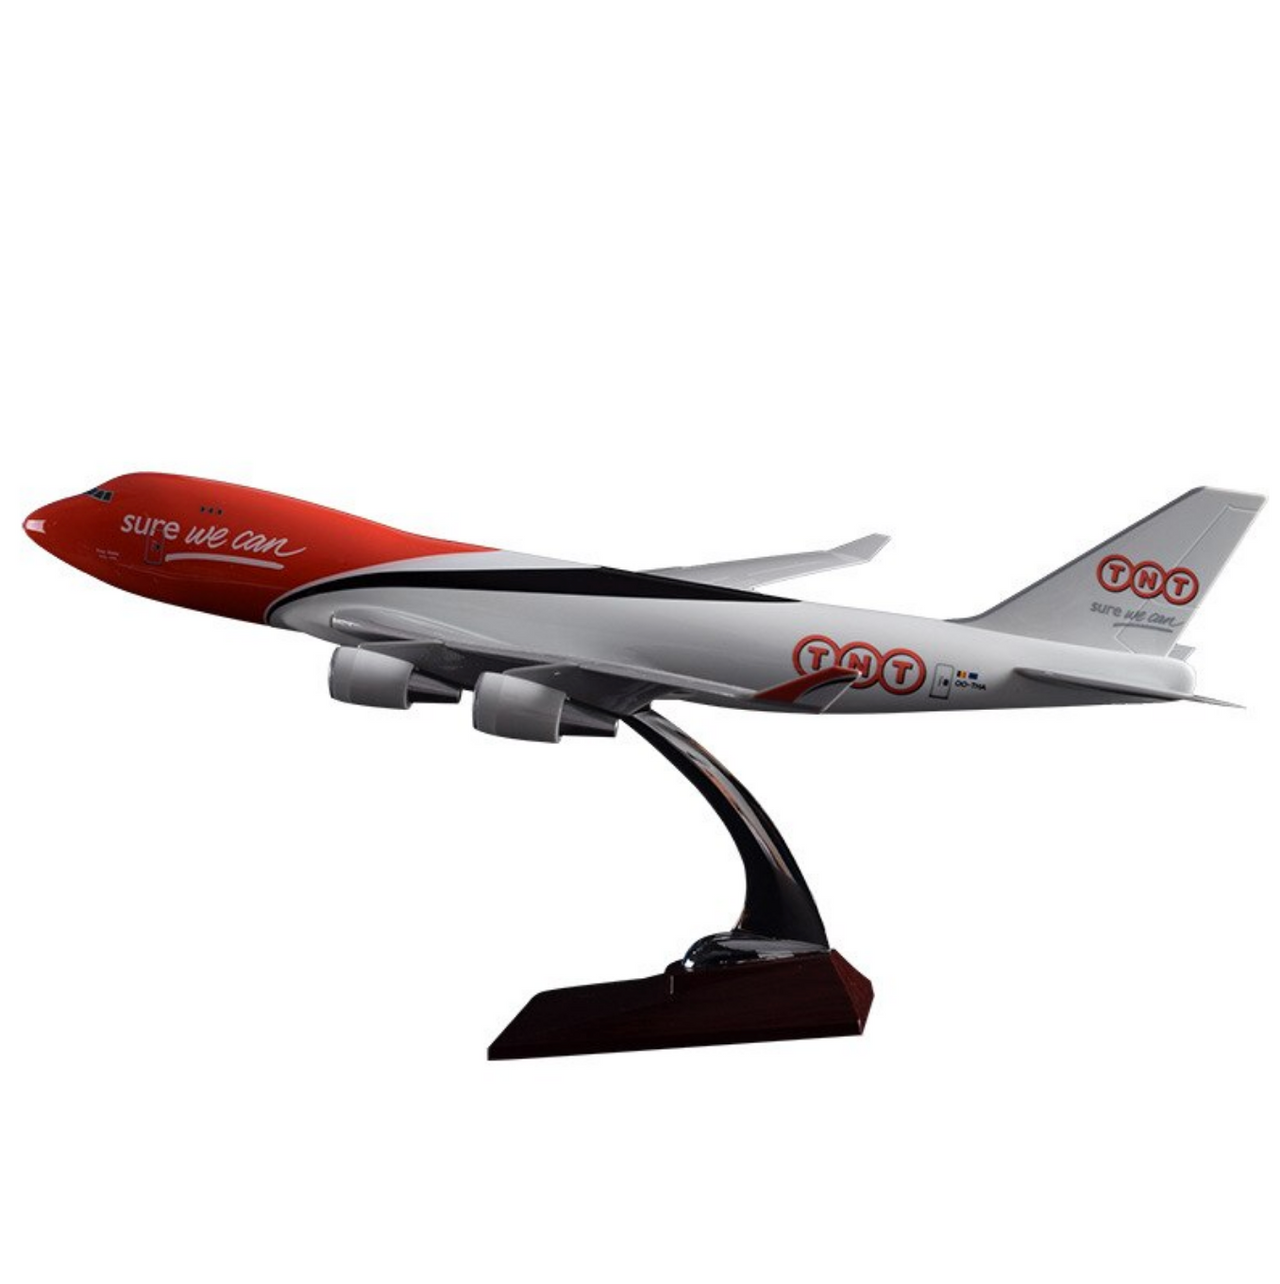 TNT Express Boeing 747 Airplane Model (Handmade 47CM)